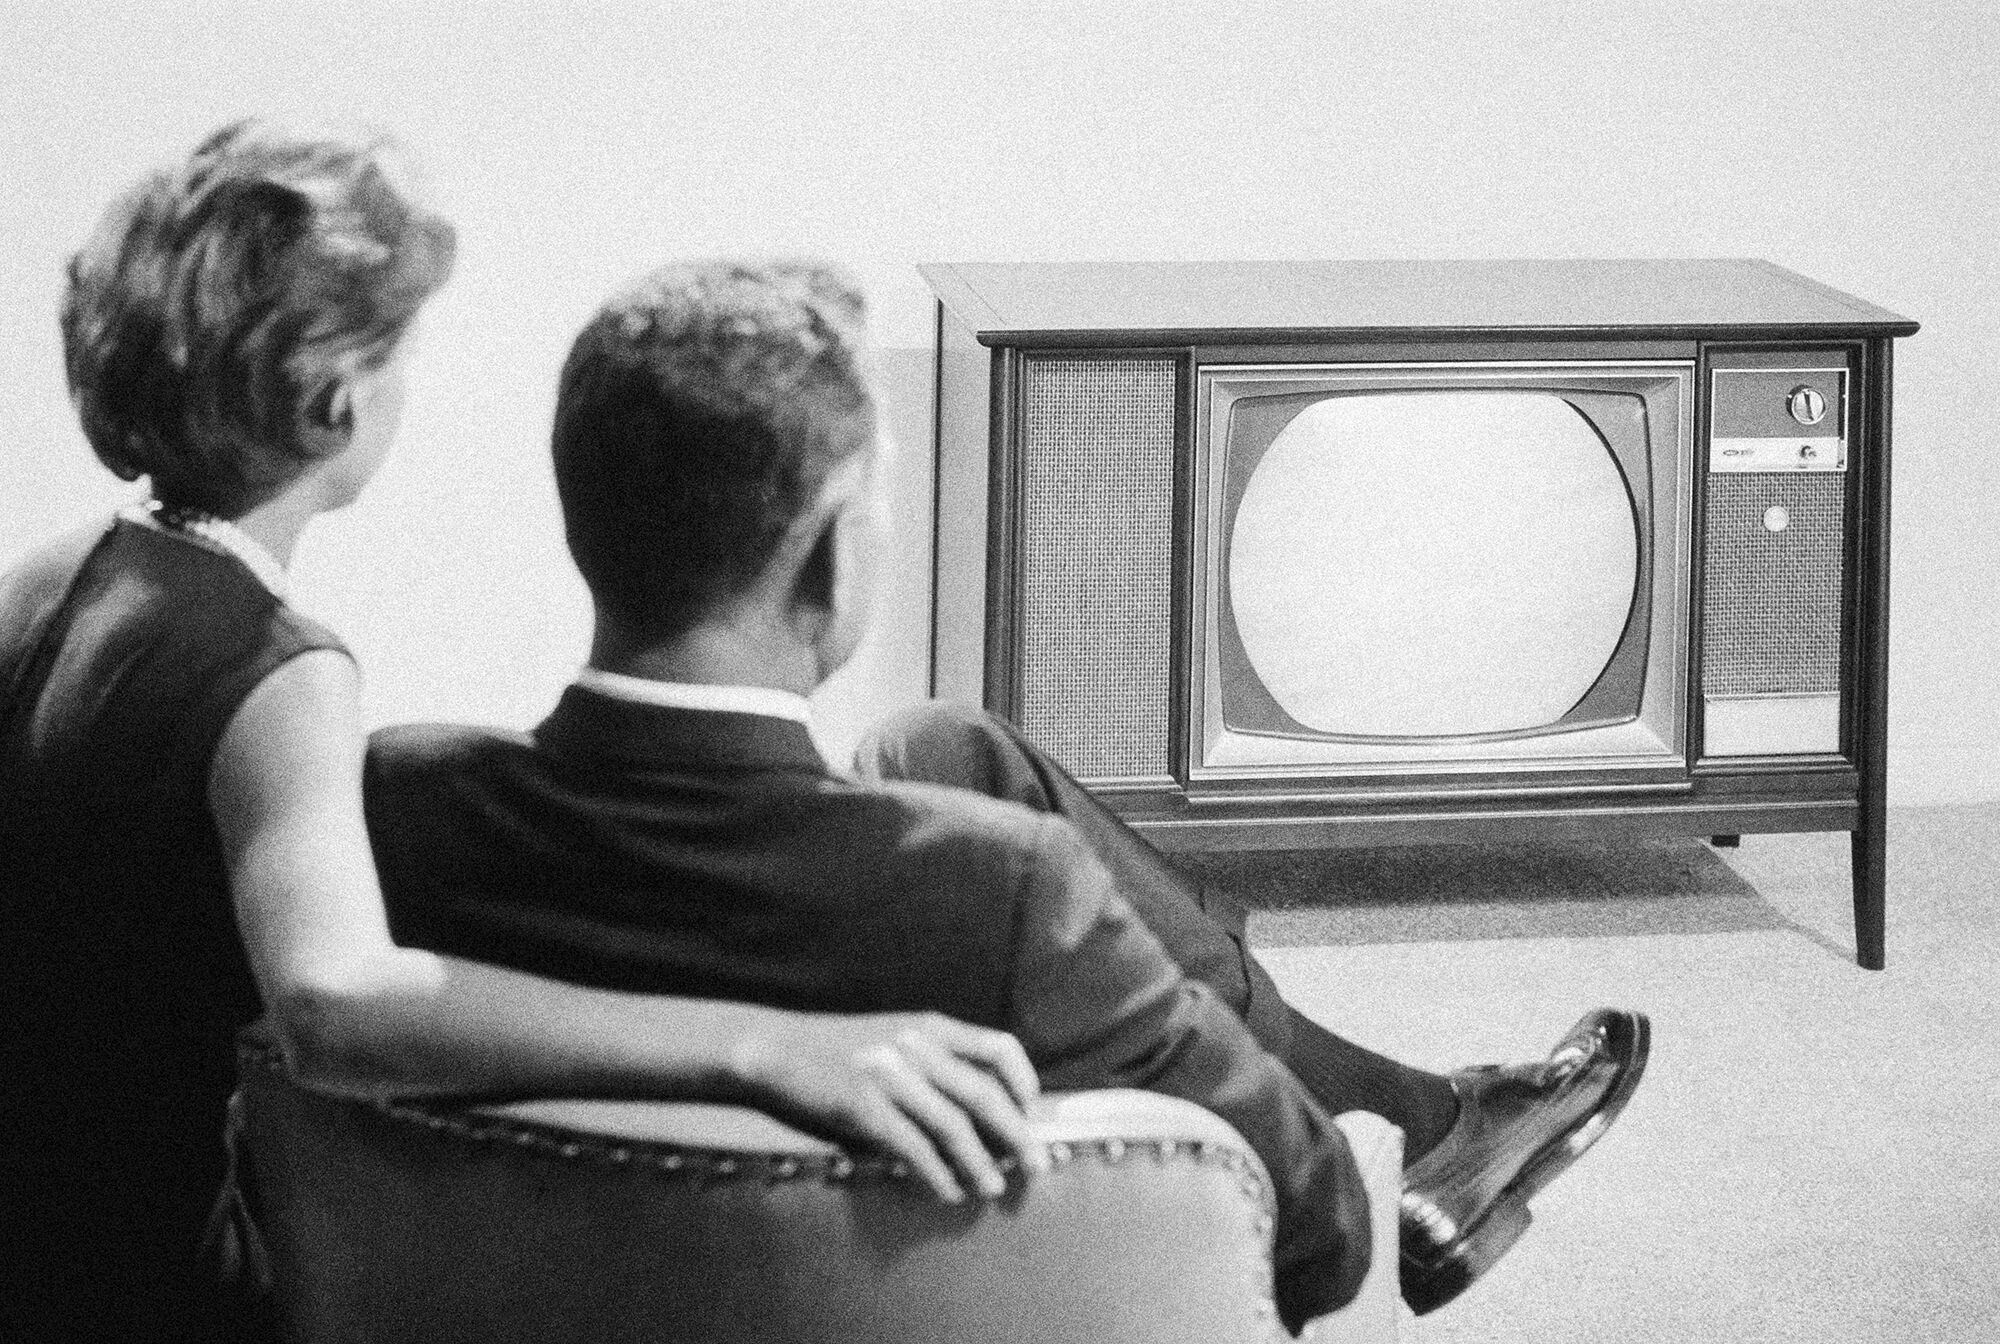 Person tv. Старый телевизор. Старинный телевизор. Ретро телевизор. Человек телевизор.